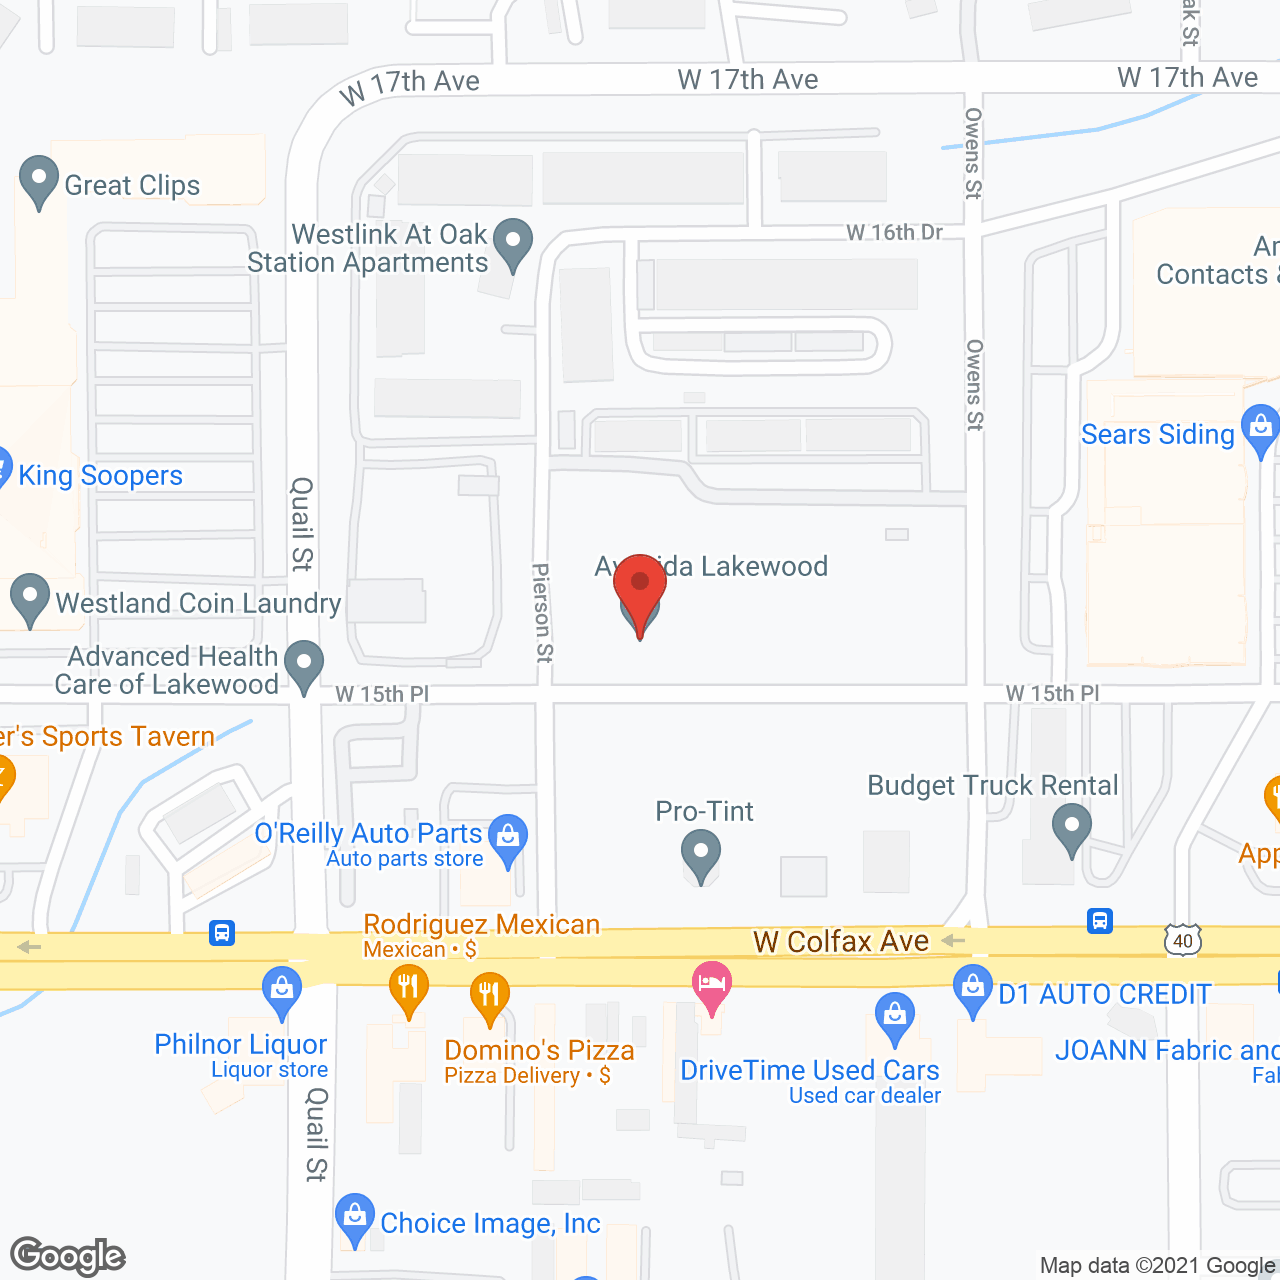 Avenida Lakewood in google map